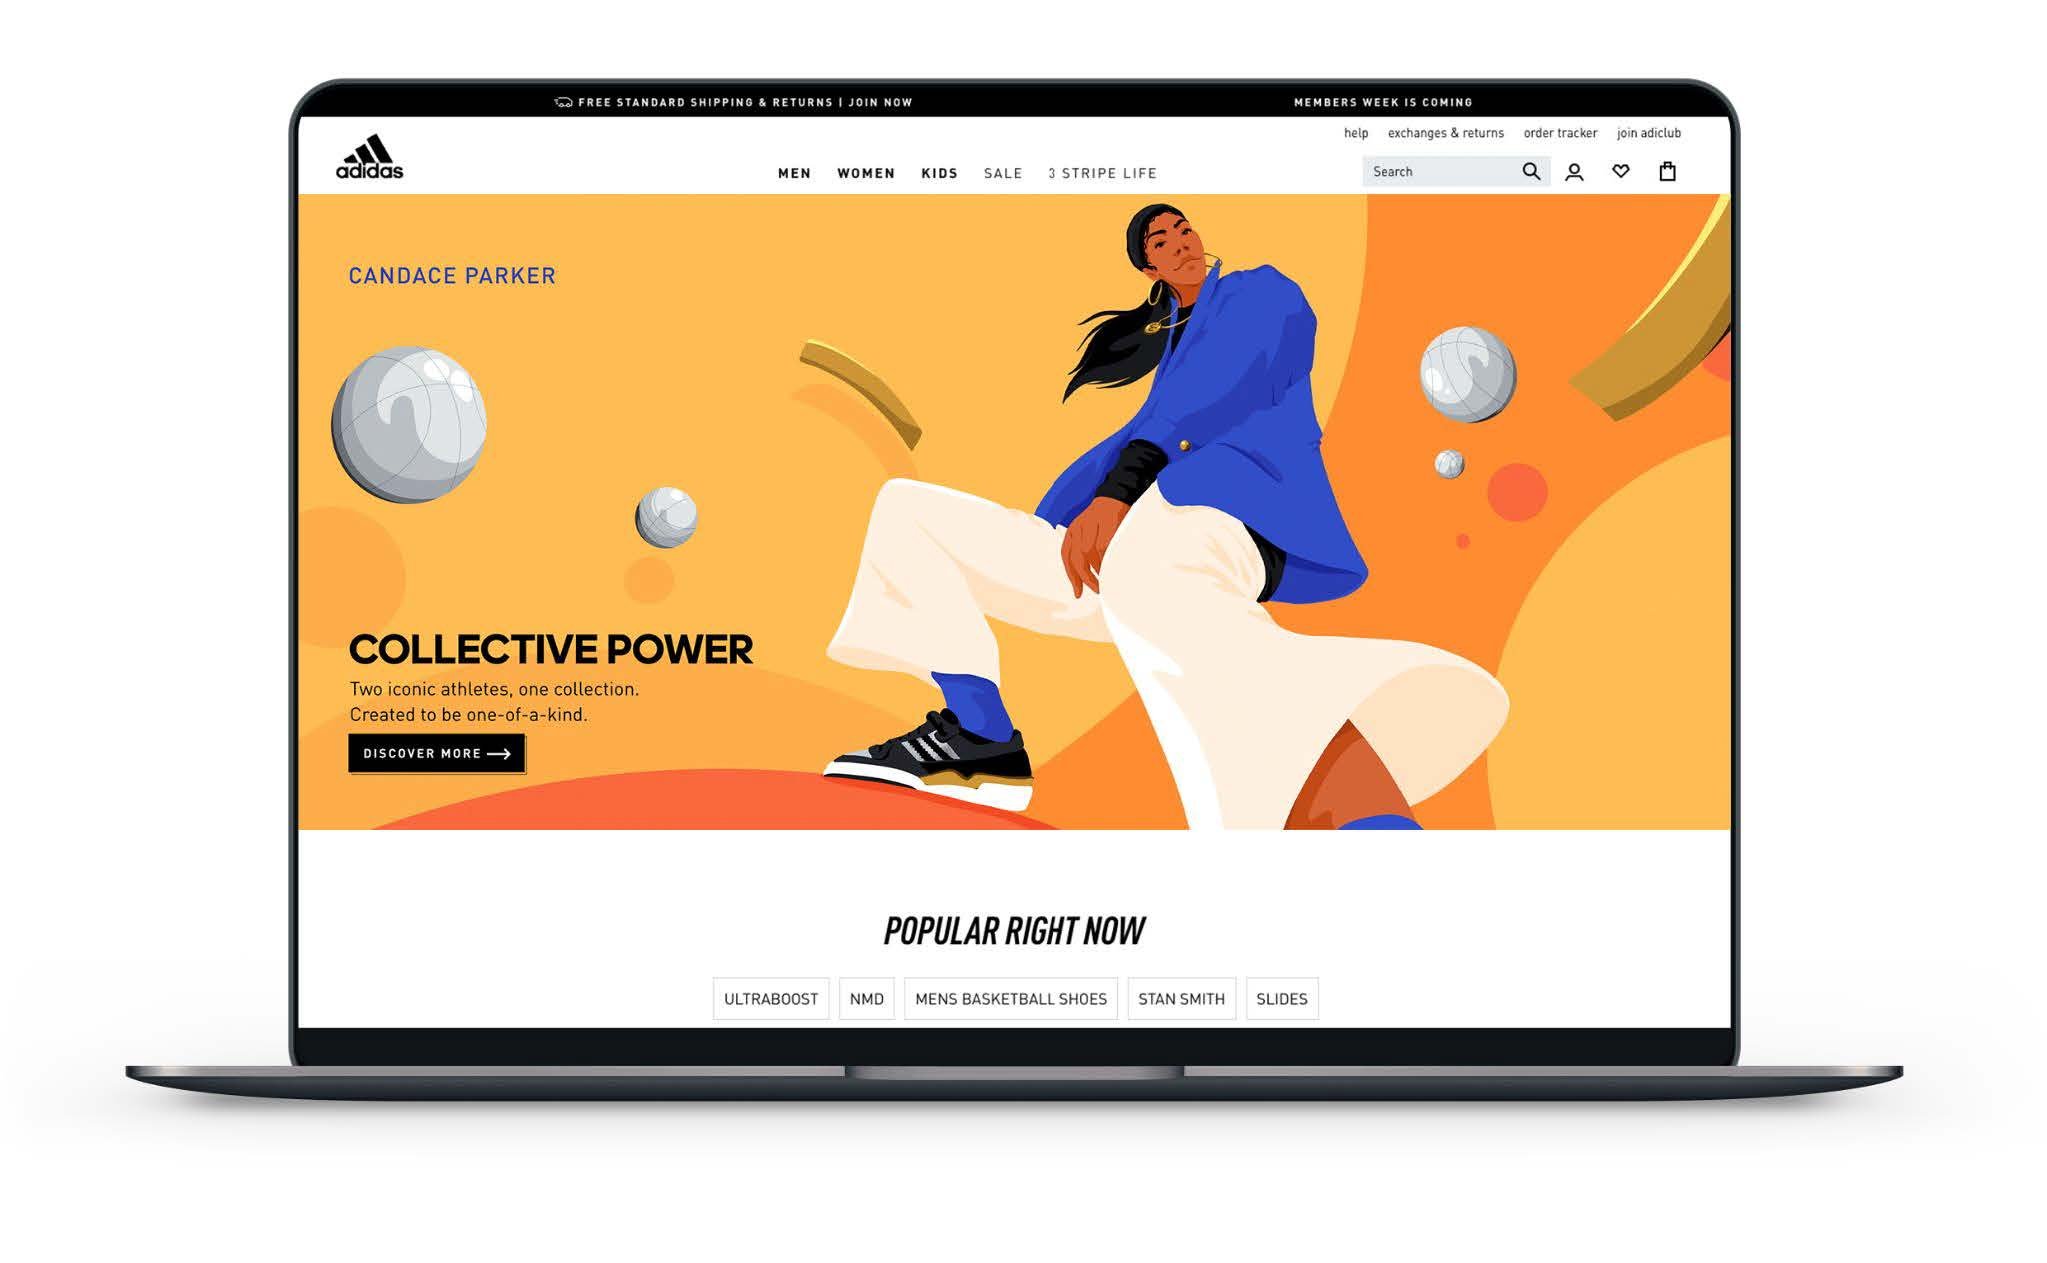 adidas_Collective Power_Digital Campaign.jpg